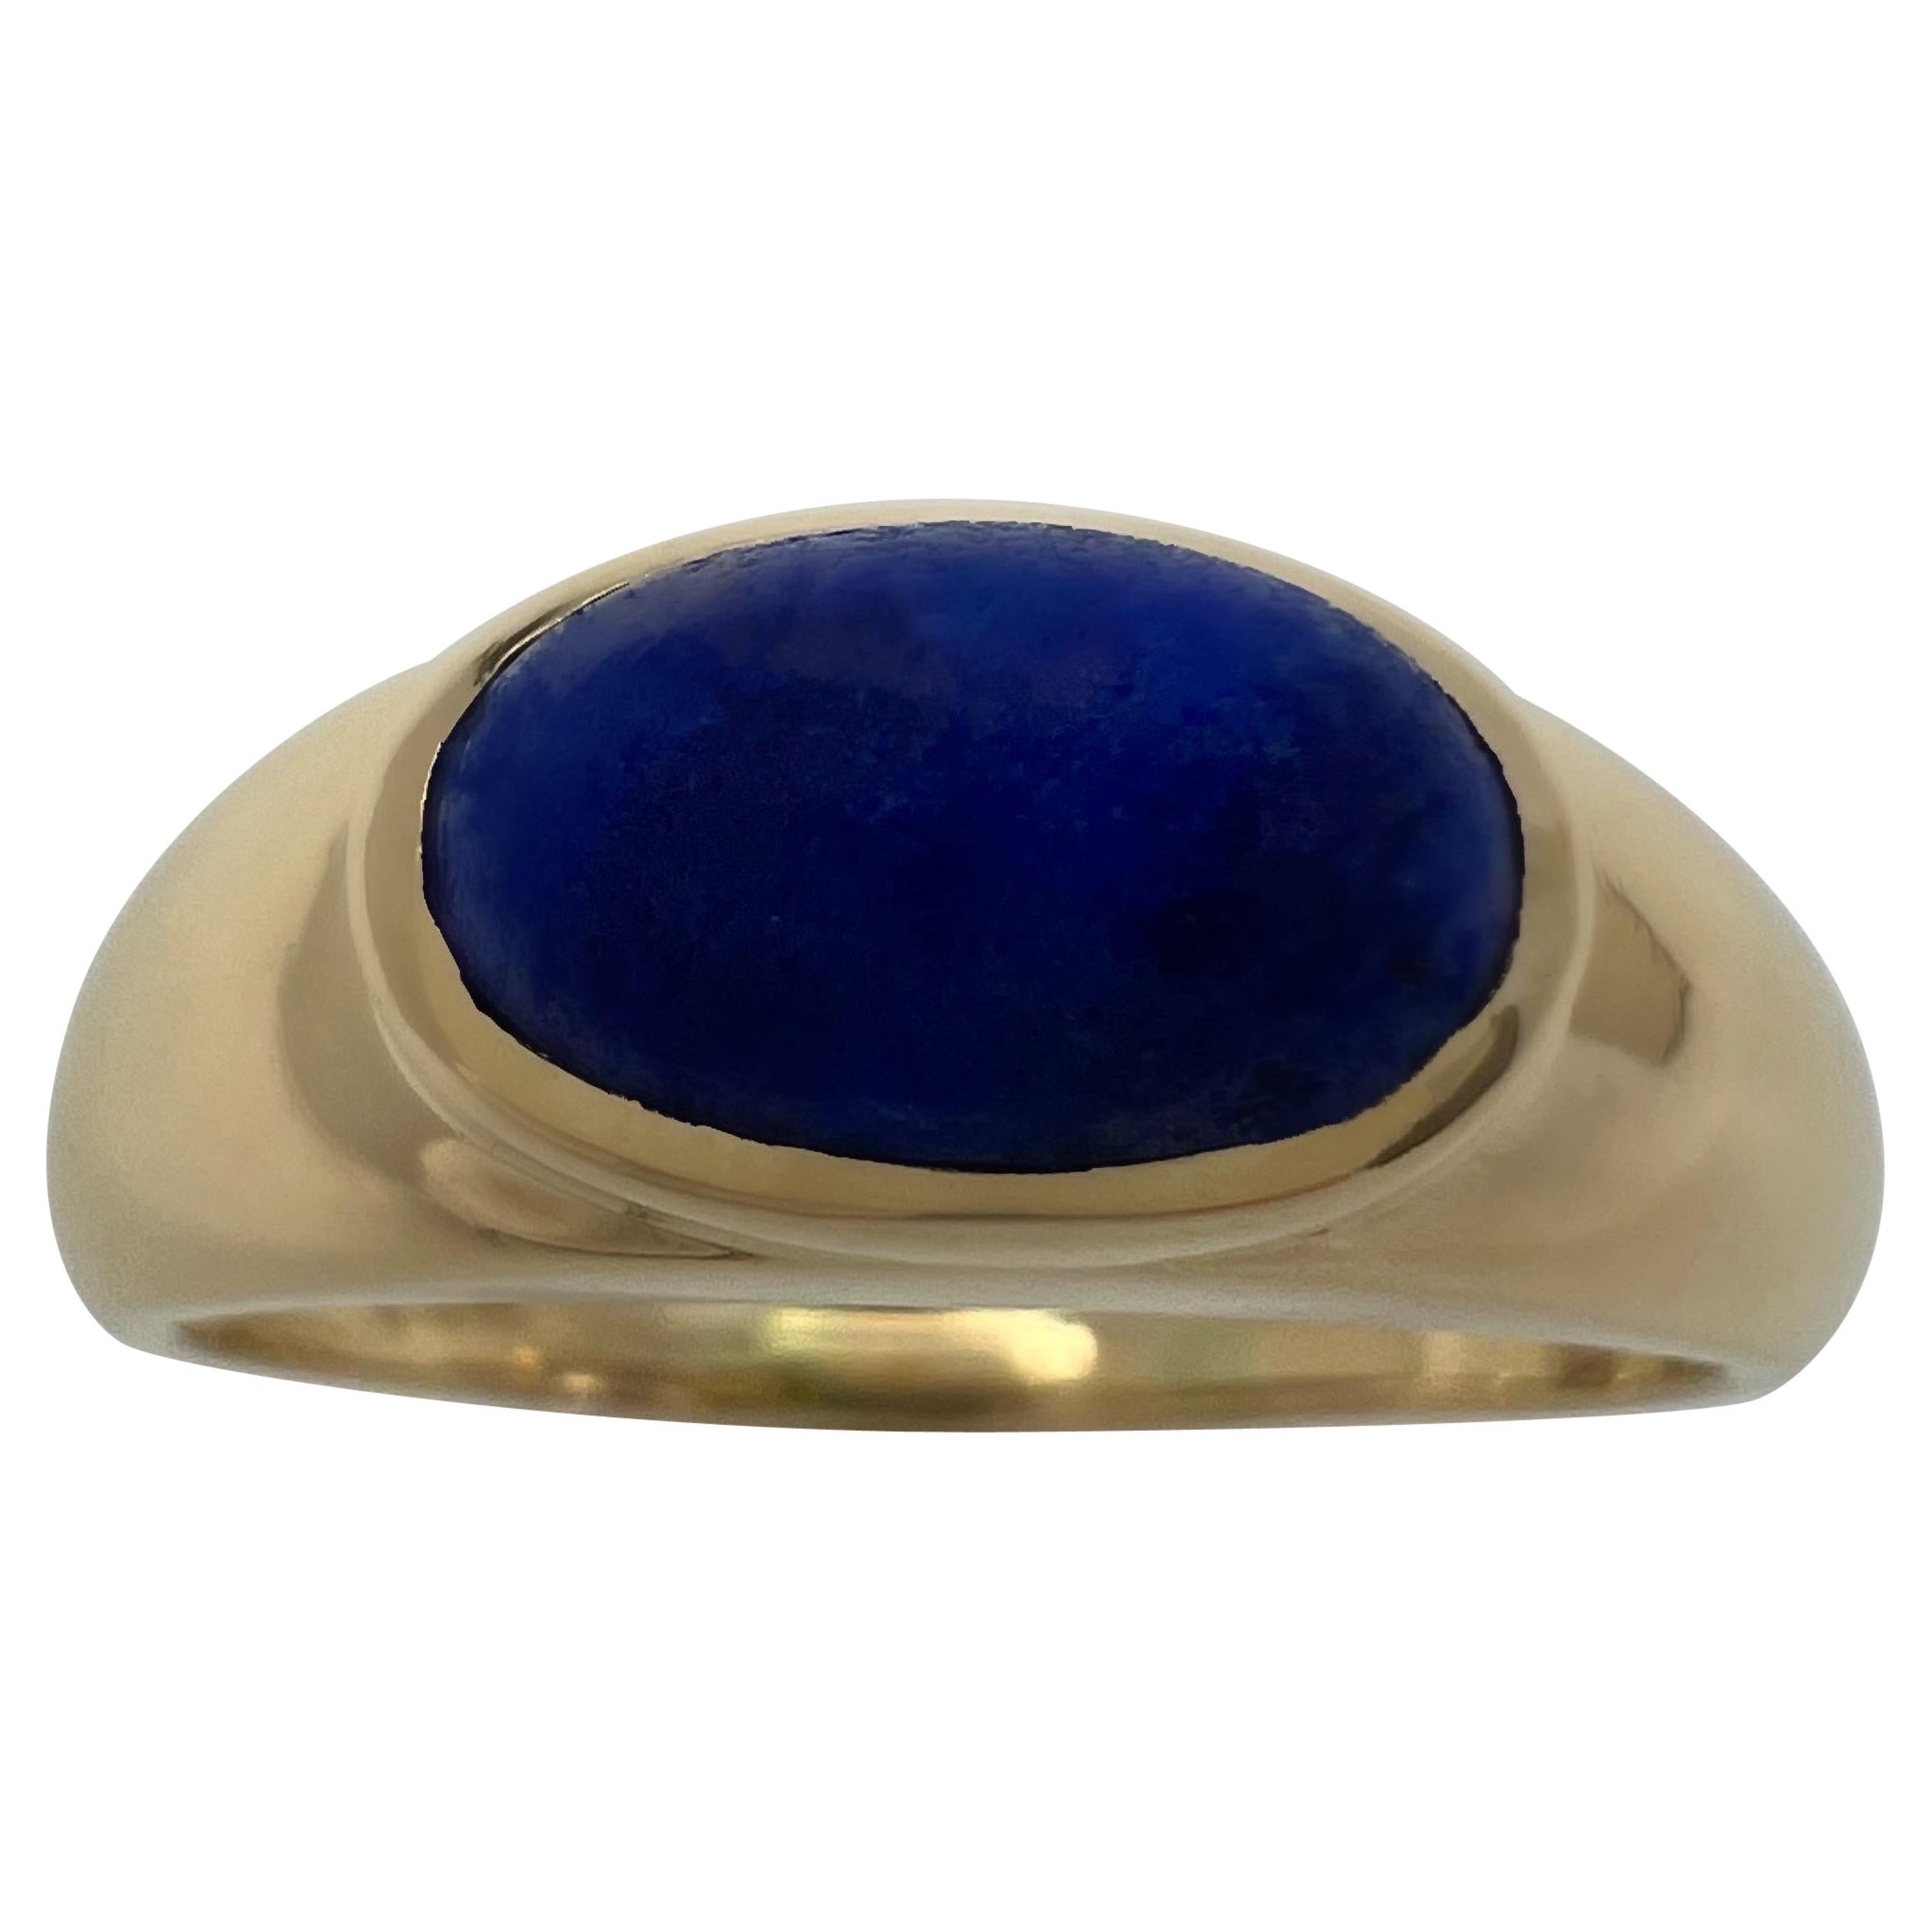 Vintage Van Cleef & Arpels Blauer Lapislazuli 18k Gold Oval Dome Signet Ring